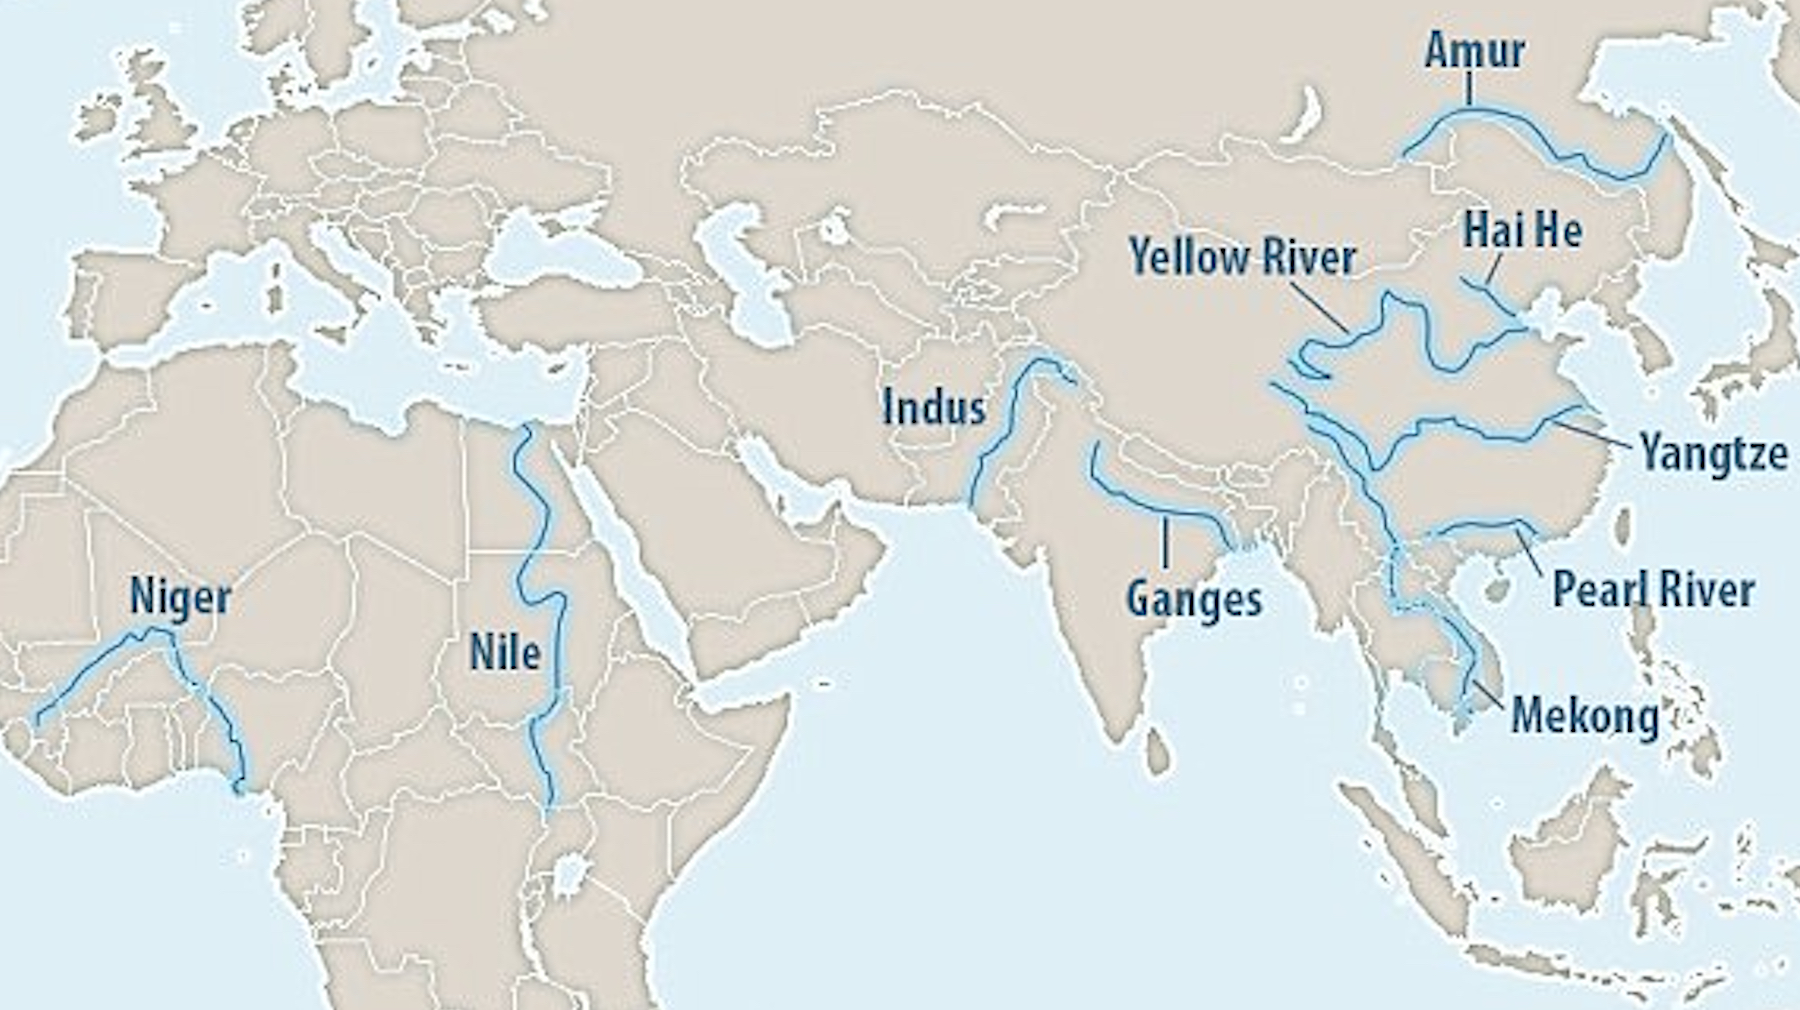 rivers world map